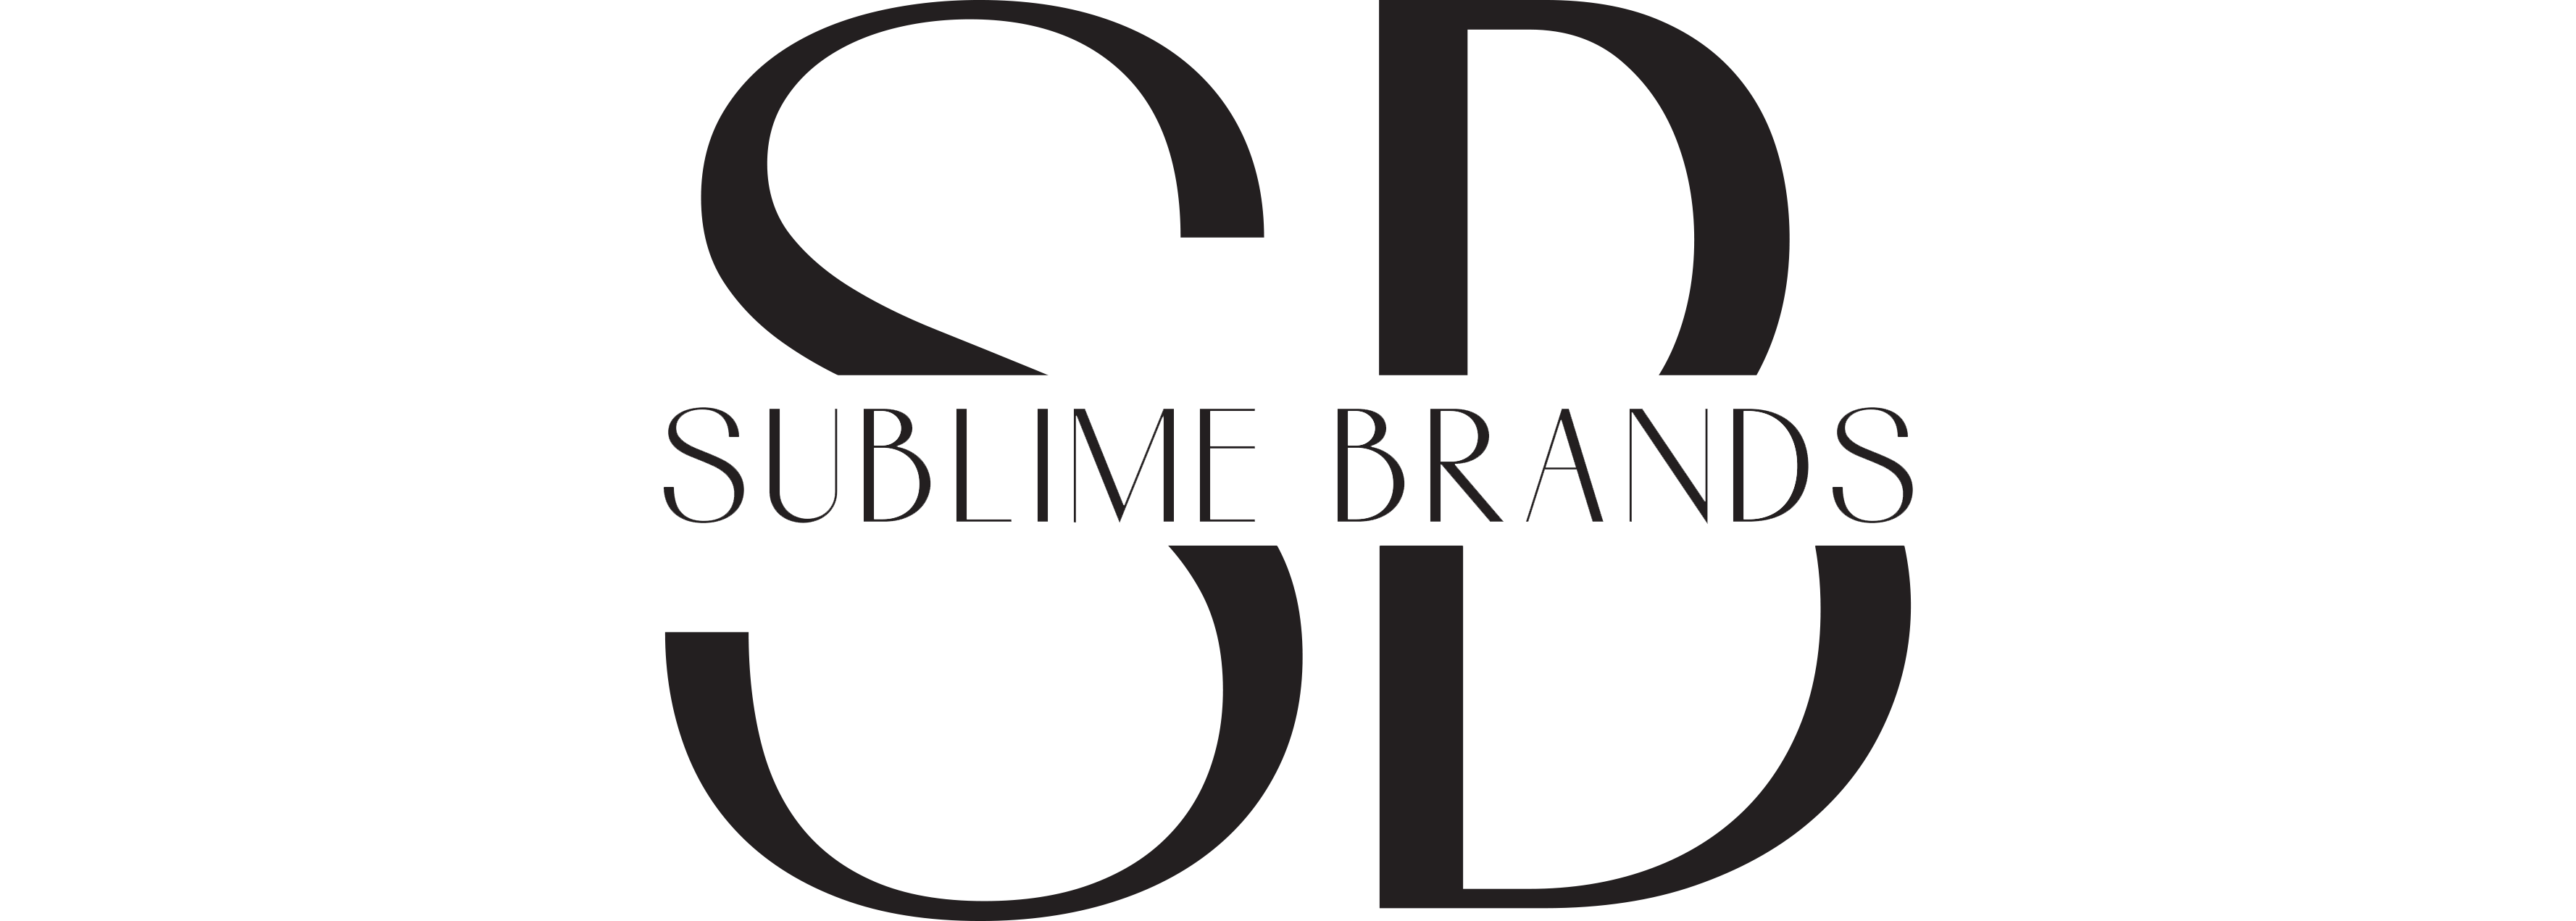 Sublime Brands logo